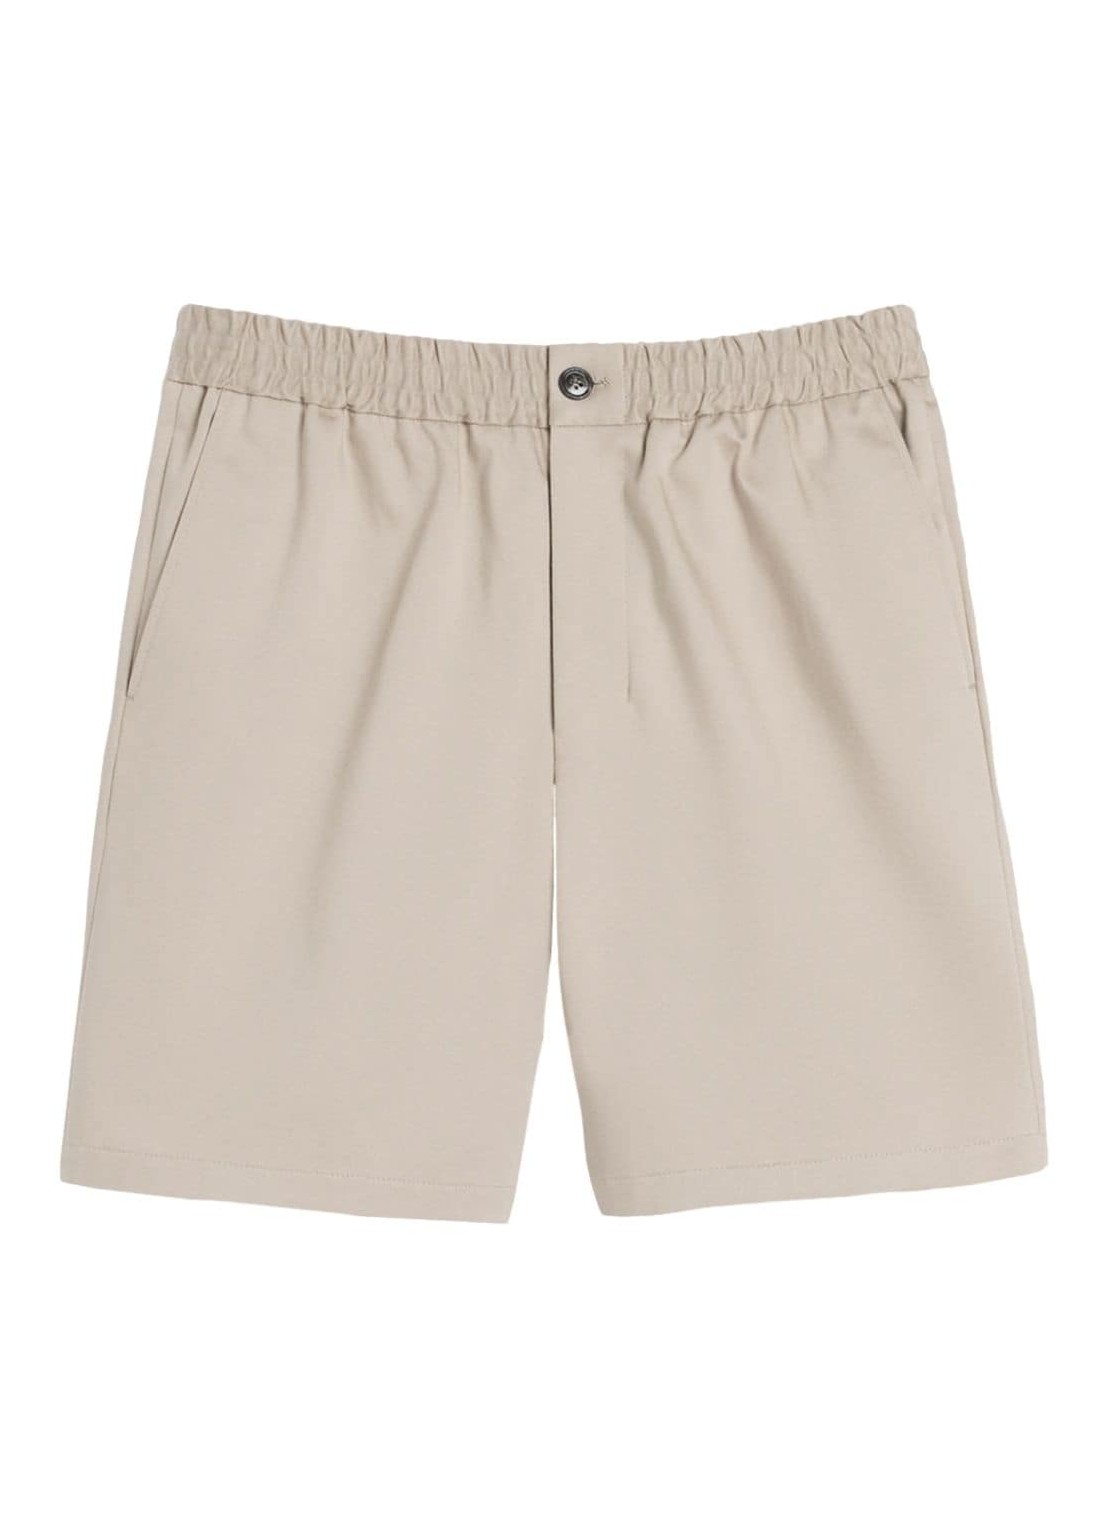 Pantalon corto ami short pant manelasticated waist shorts - hso303co0009 271 talla beige
 